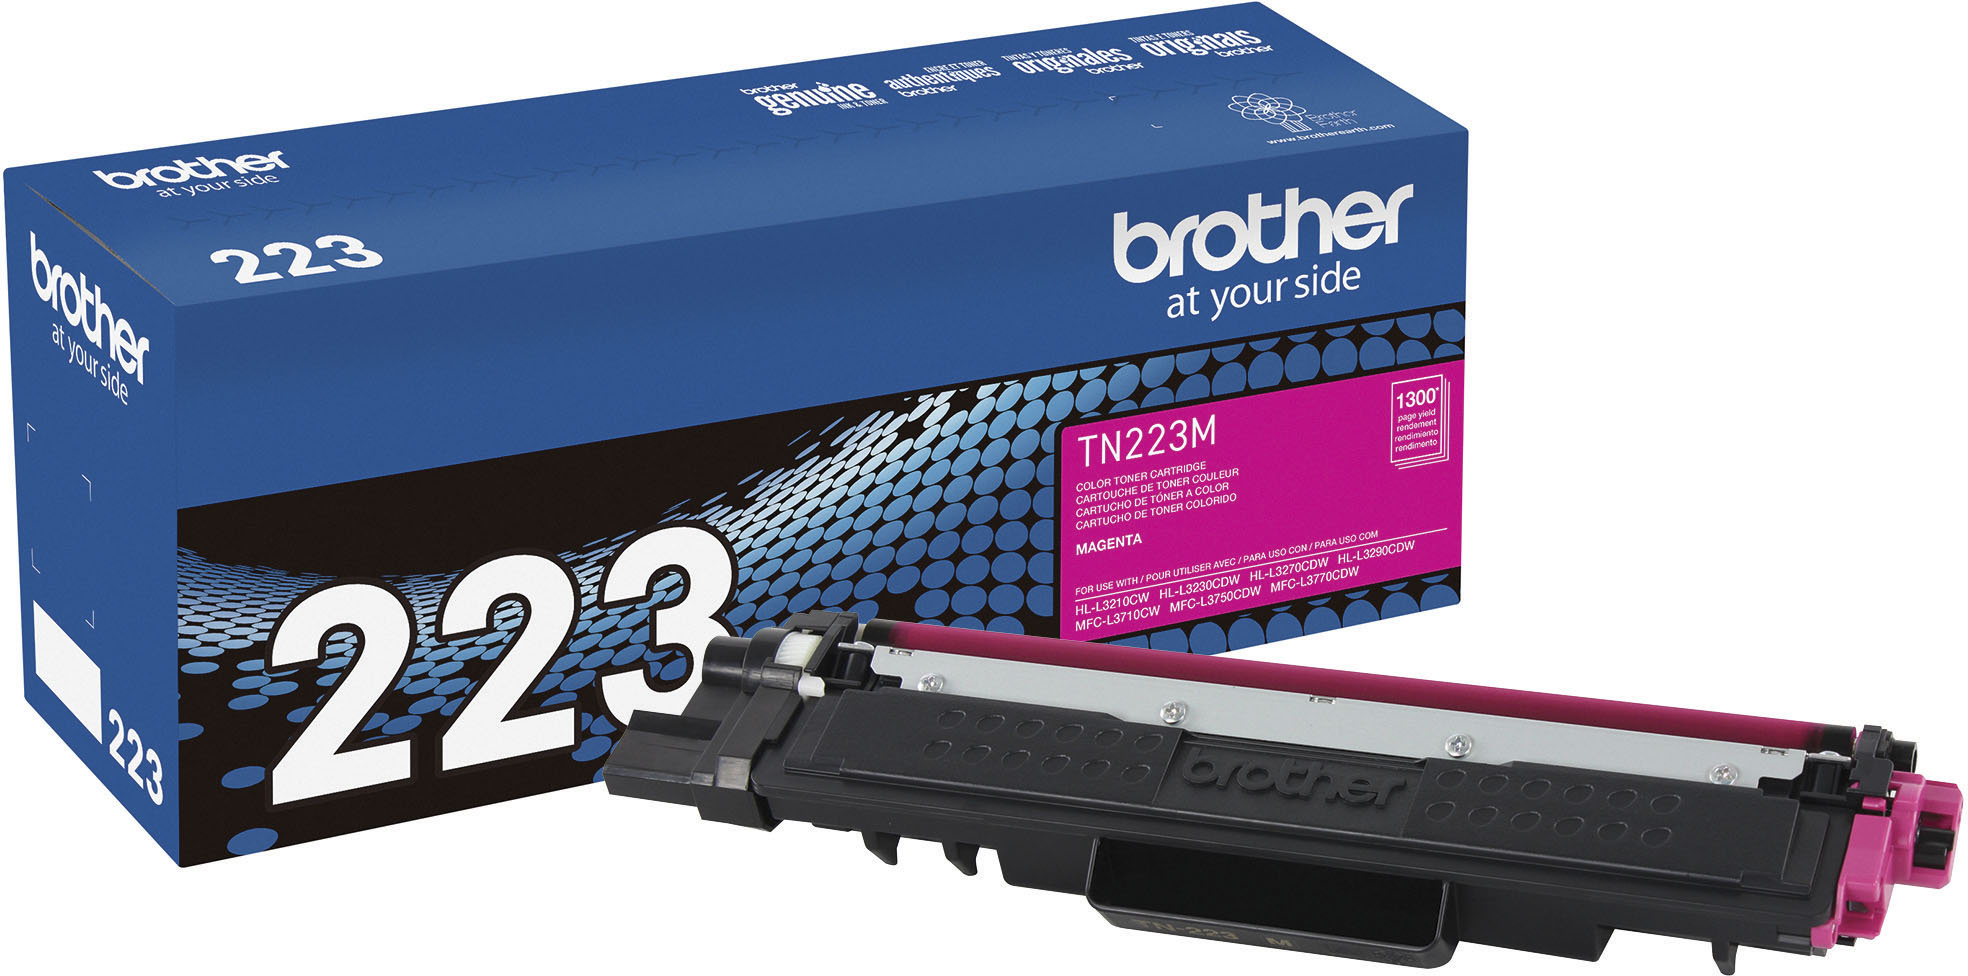 Brother - TN223M Standard-Yield Toner Cartridge - Magenta